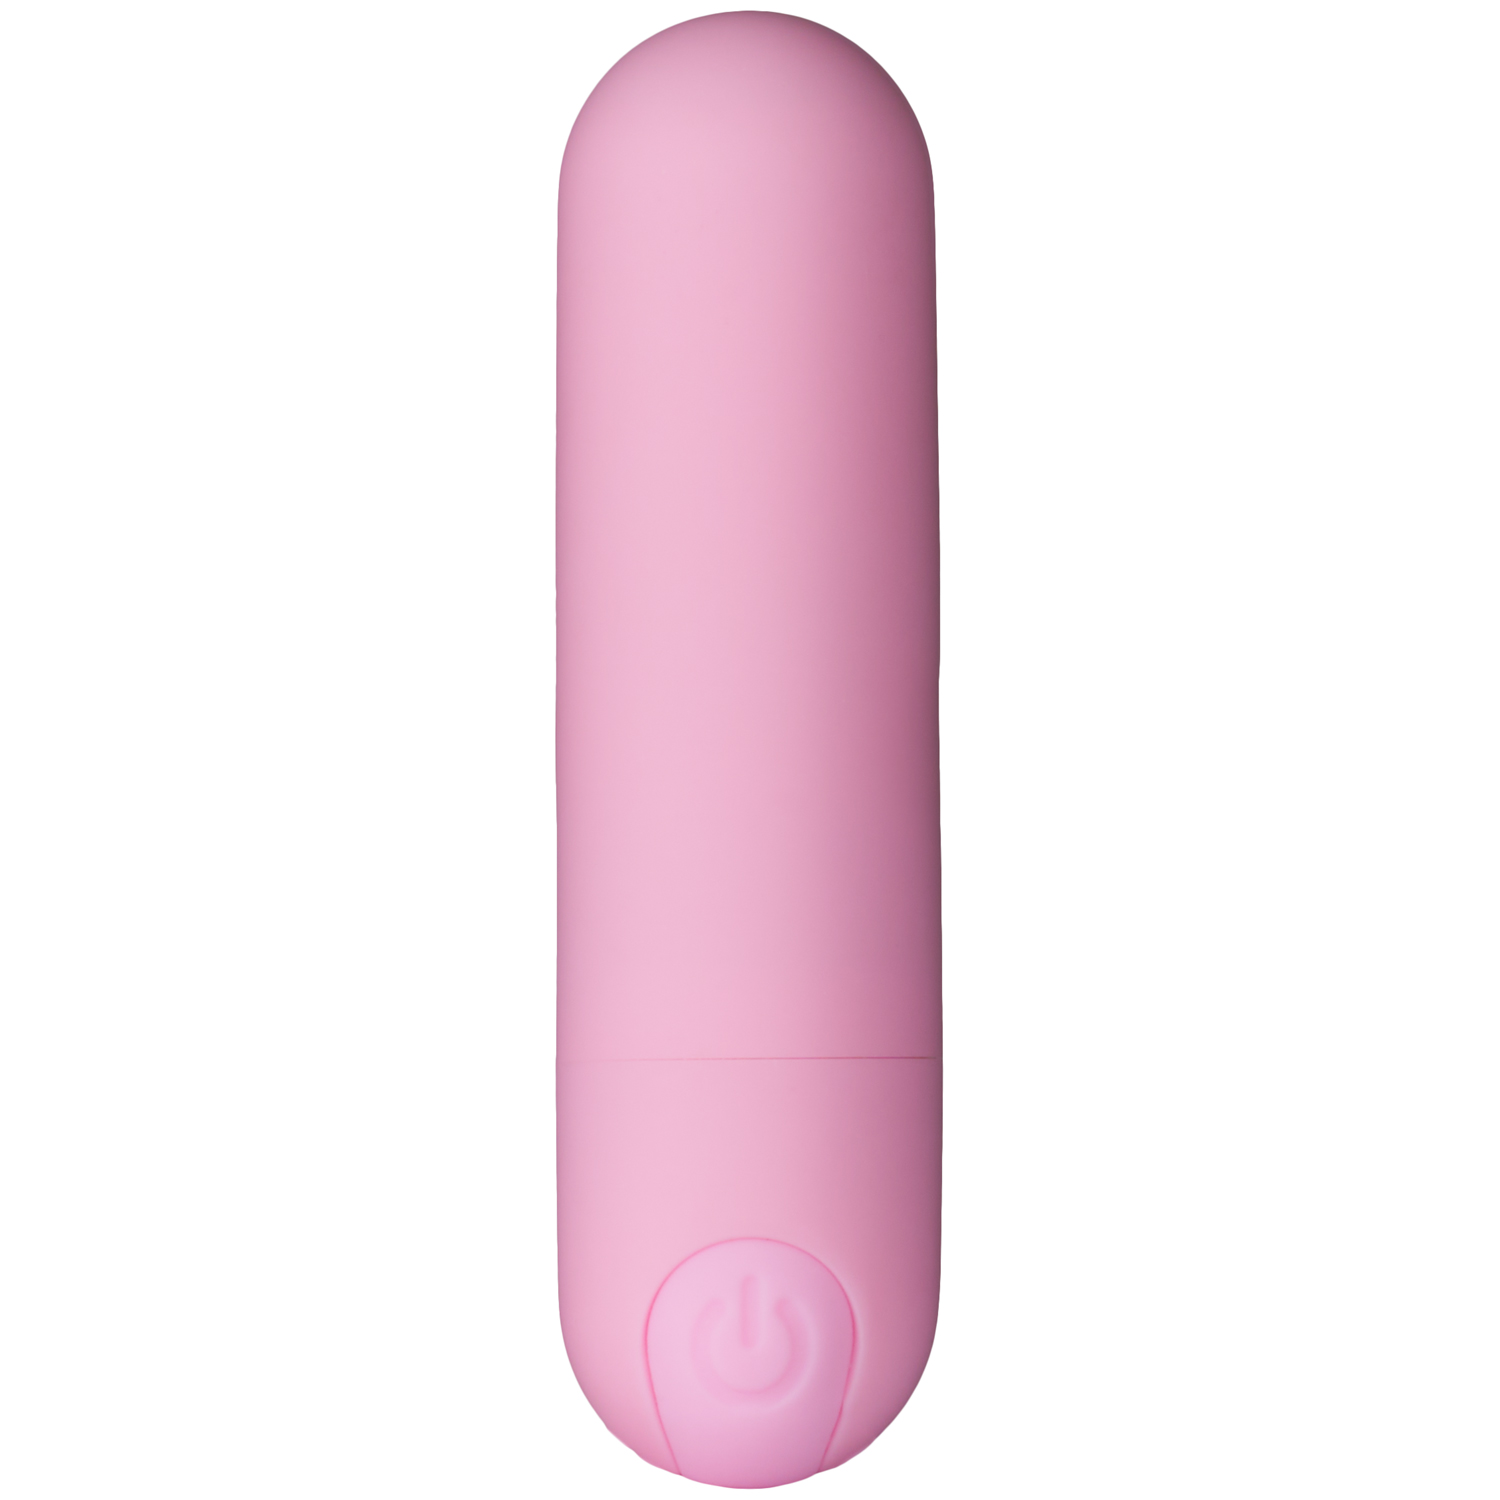 Sinful Playful Pink Opladelig PowerBullet Vibrator     - Pink